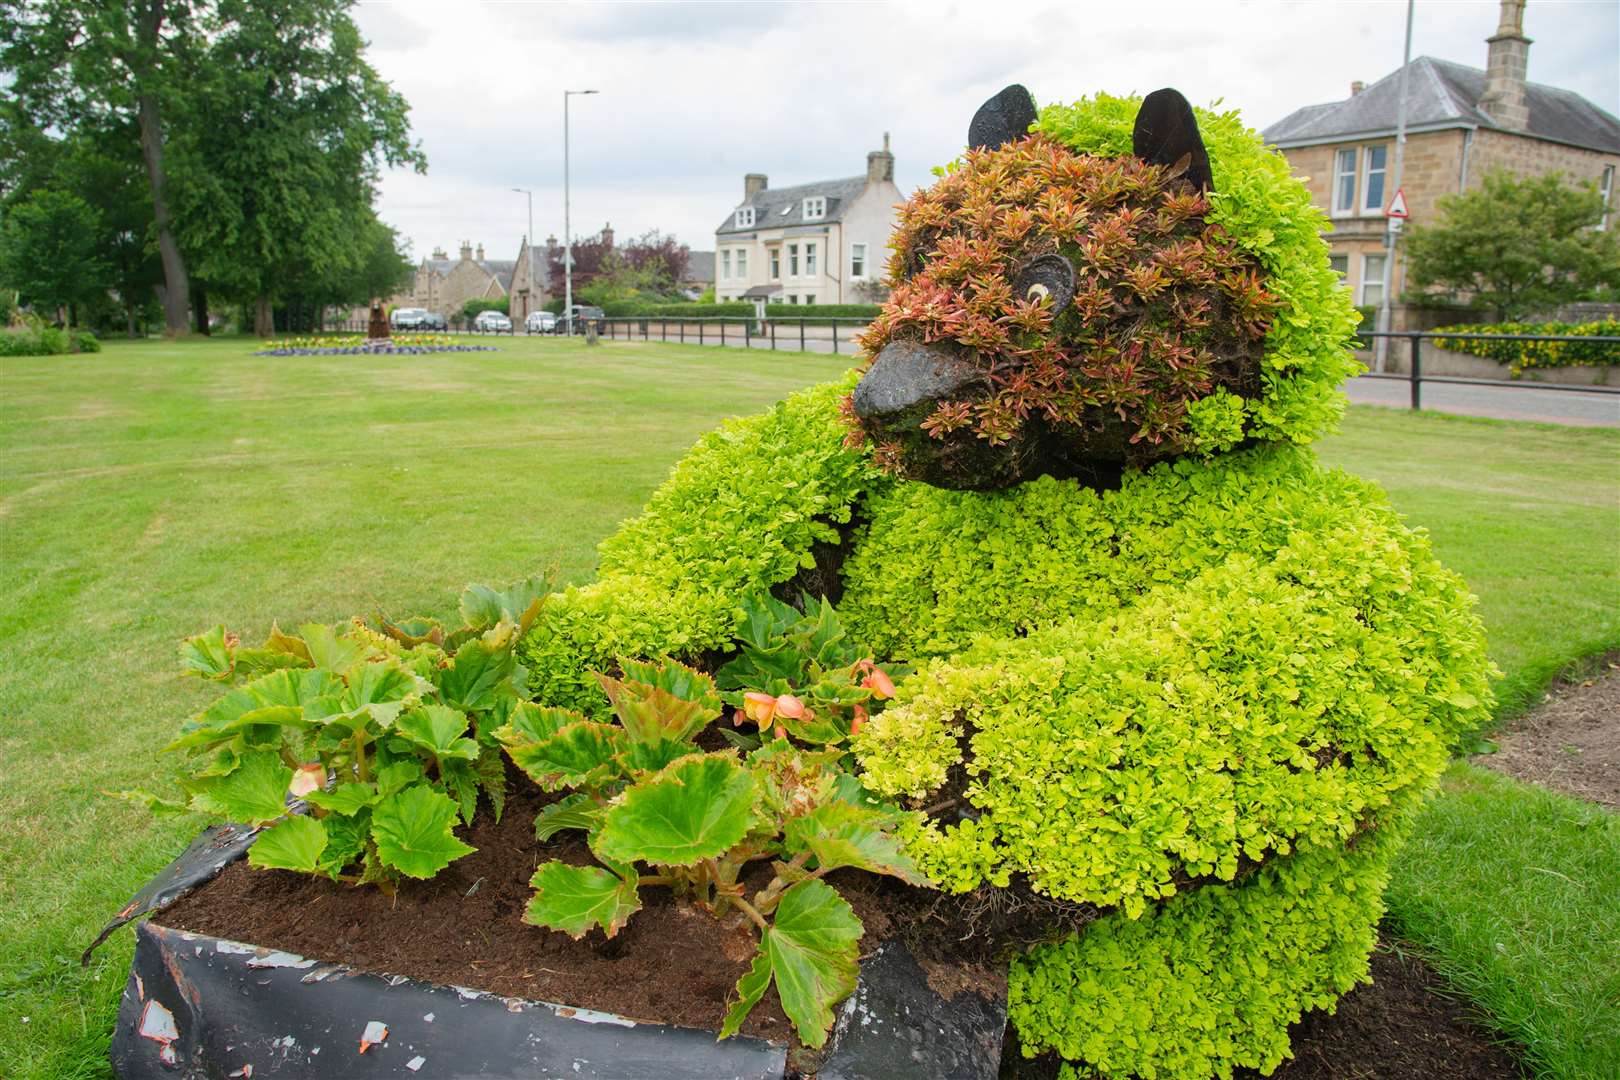 Life imitating art? A teddy bear preparing a flower bed